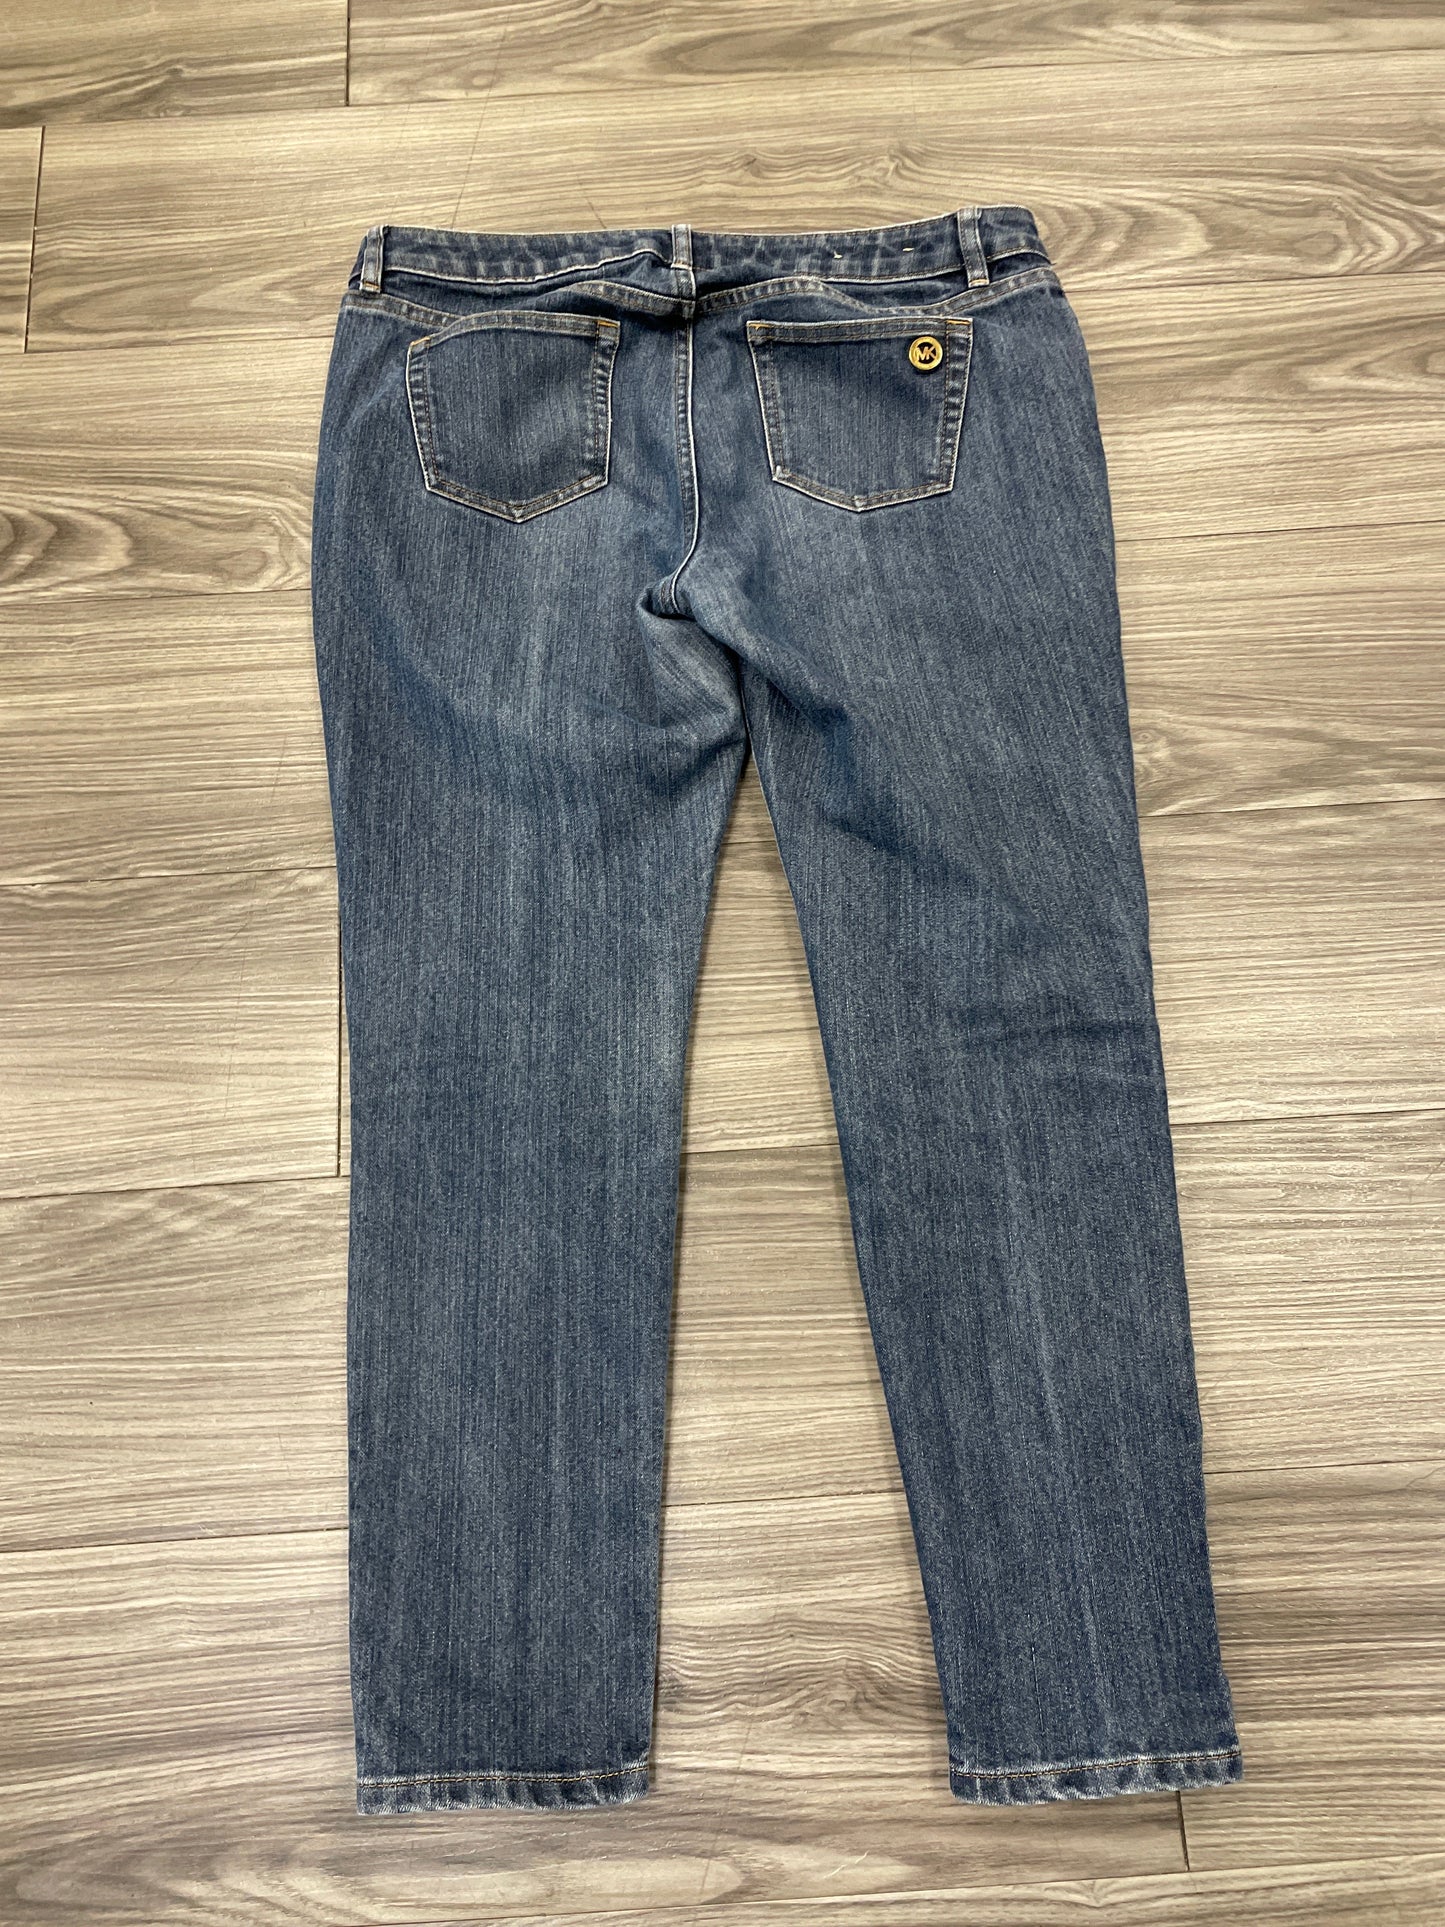 Blue Jeans Designer Michael Kors, Size 10